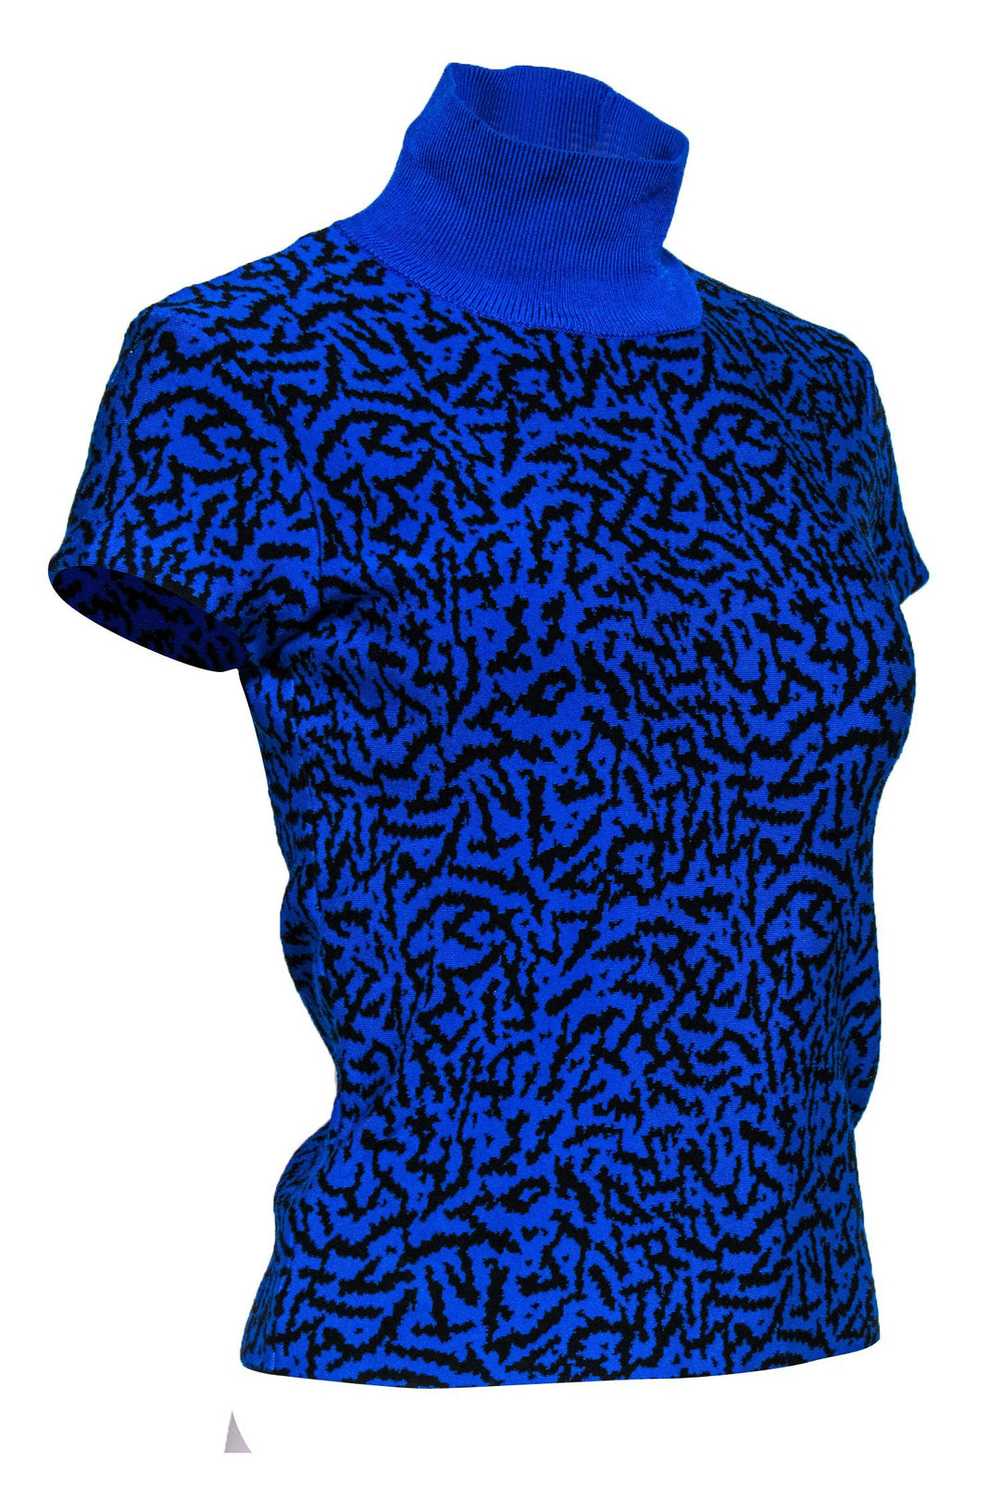 Issa London - Cobalt Blue & Black Printed Short S… - image 2